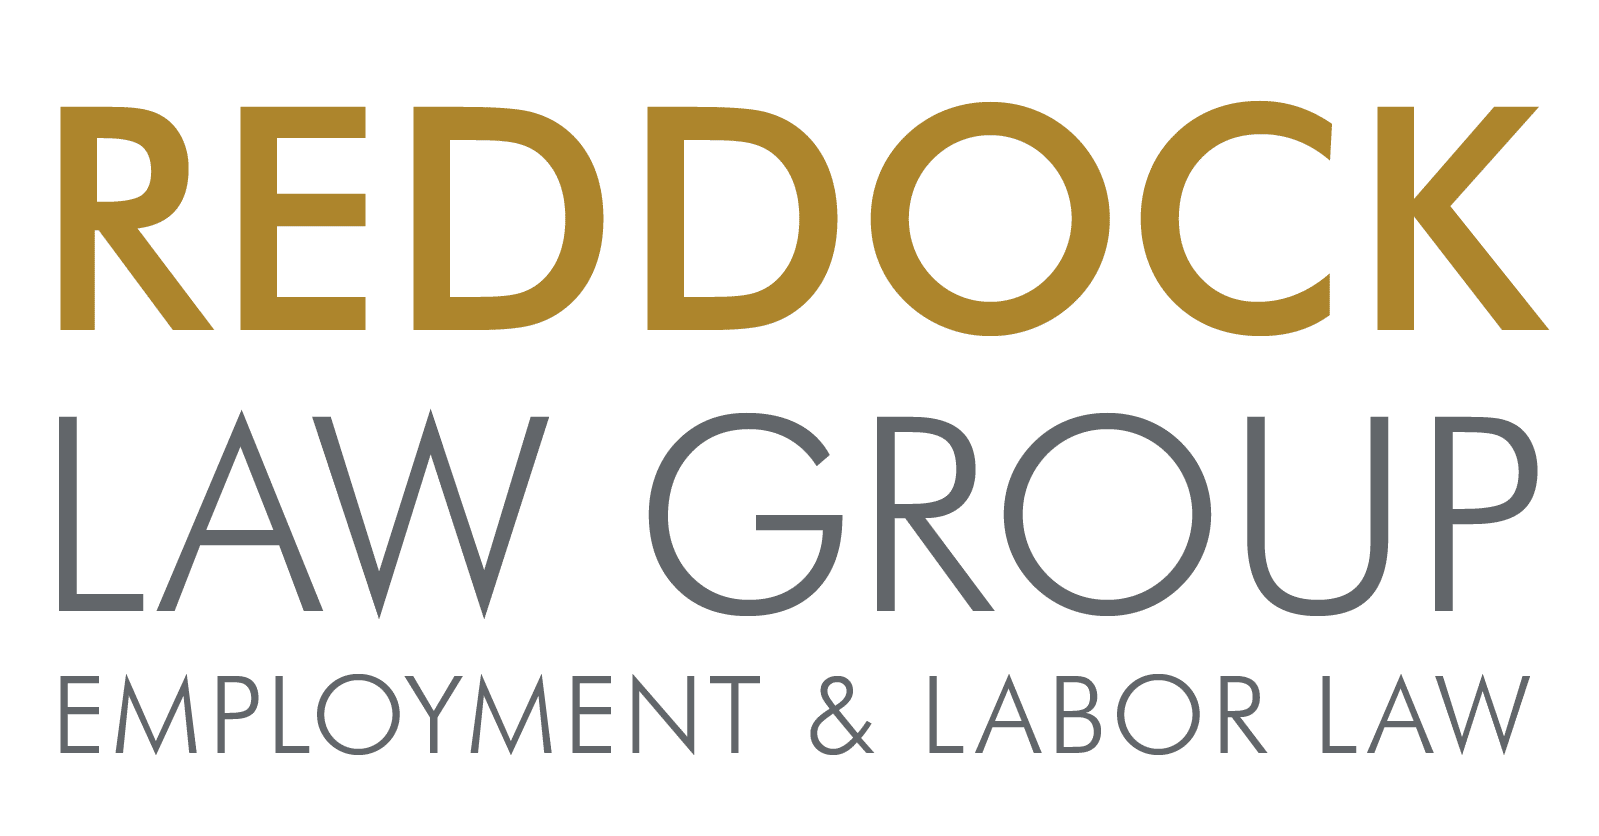 Reddock Law Group